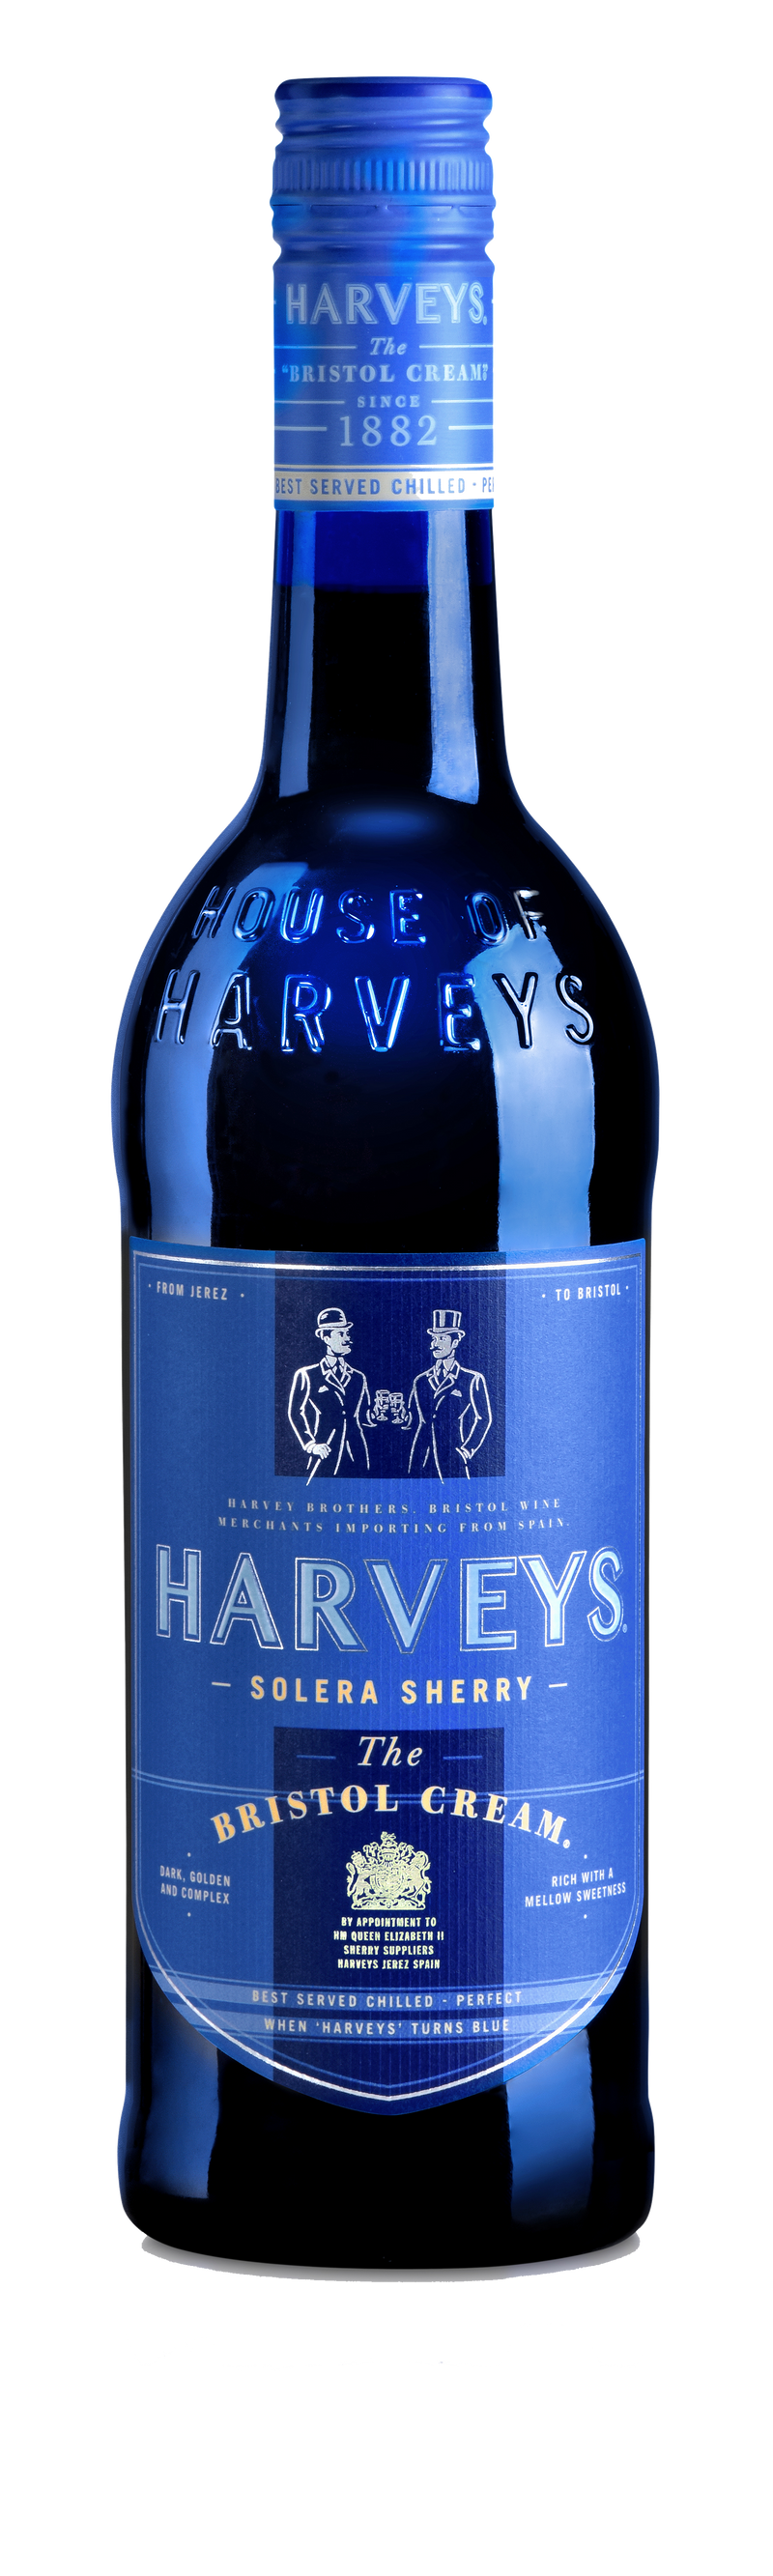 Harvey's Bristol Cream 75cl